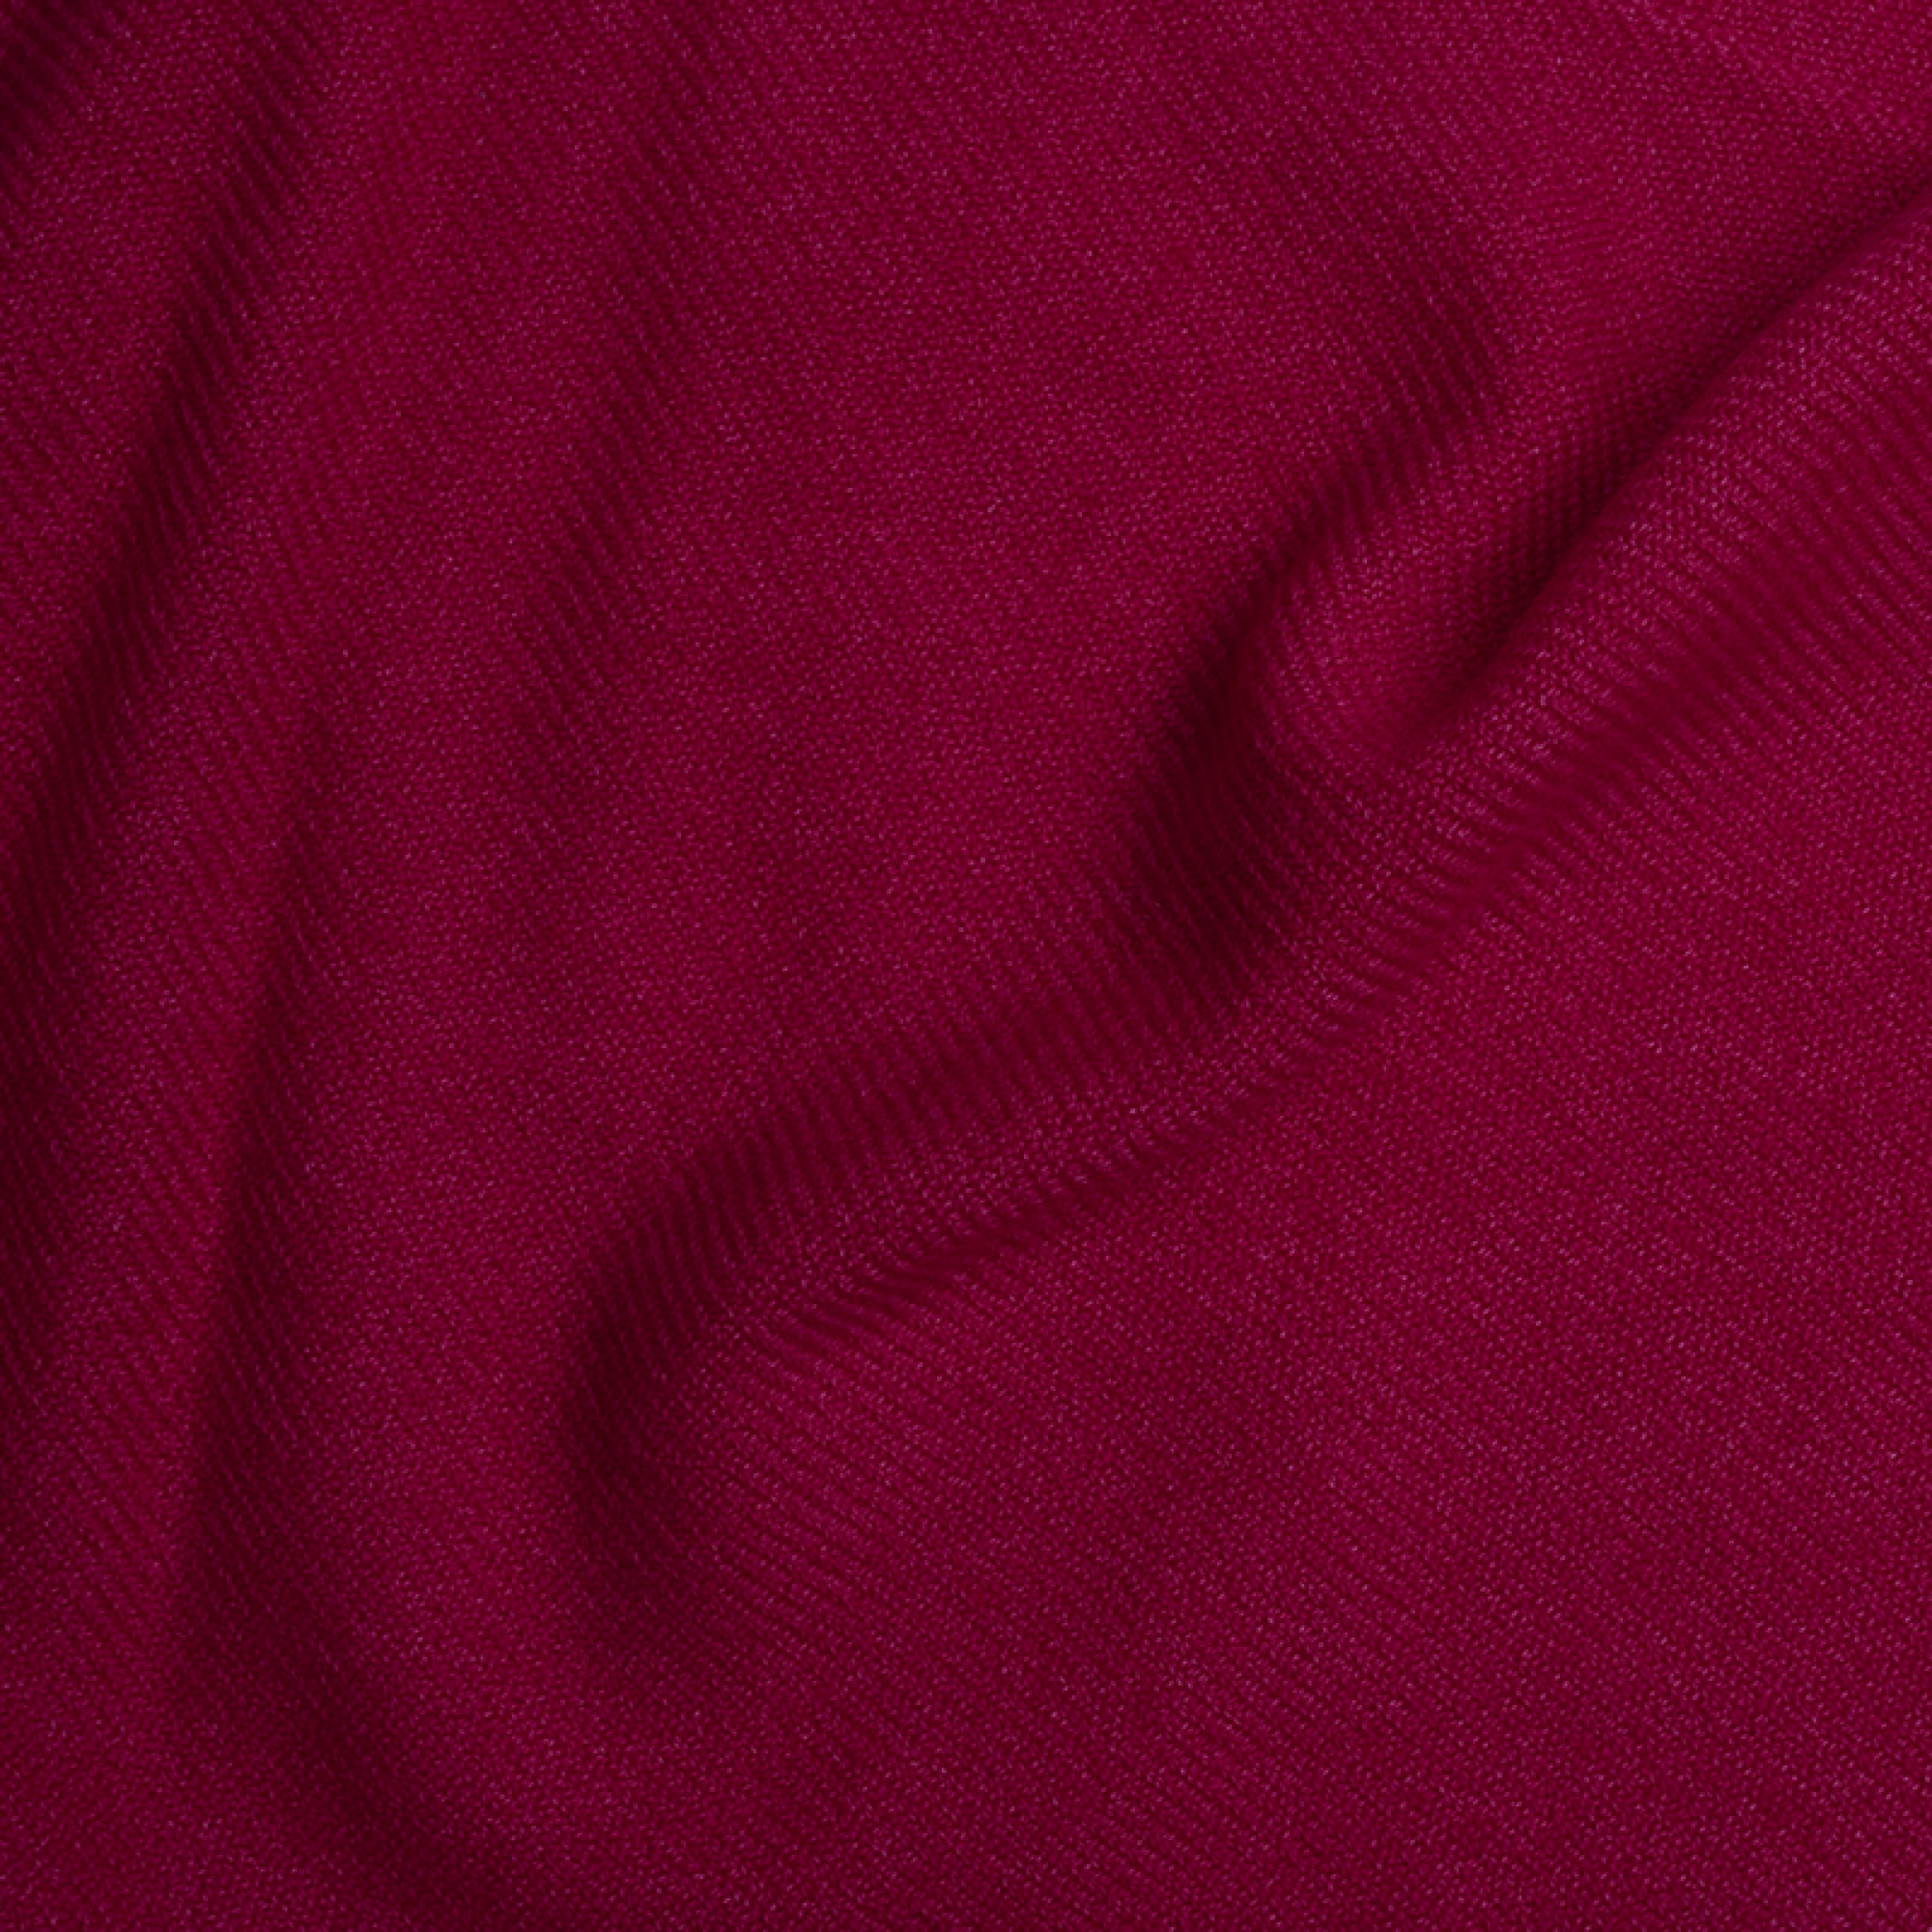 Cashmere accessories blanket toodoo plain m 180 x 220 bright rose 180 x 220 cm